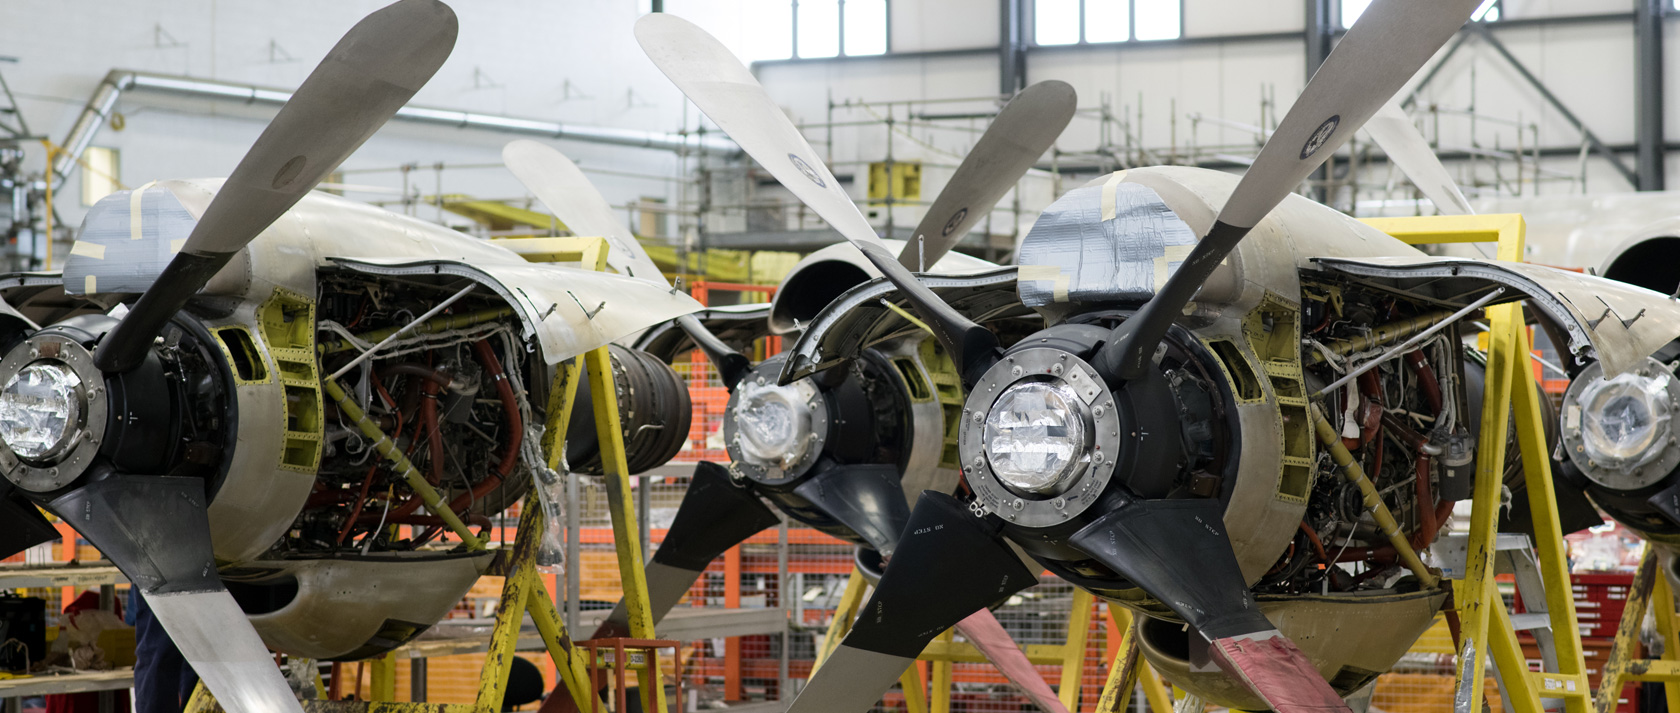 Series of Aircraft Propellors in a Hangar